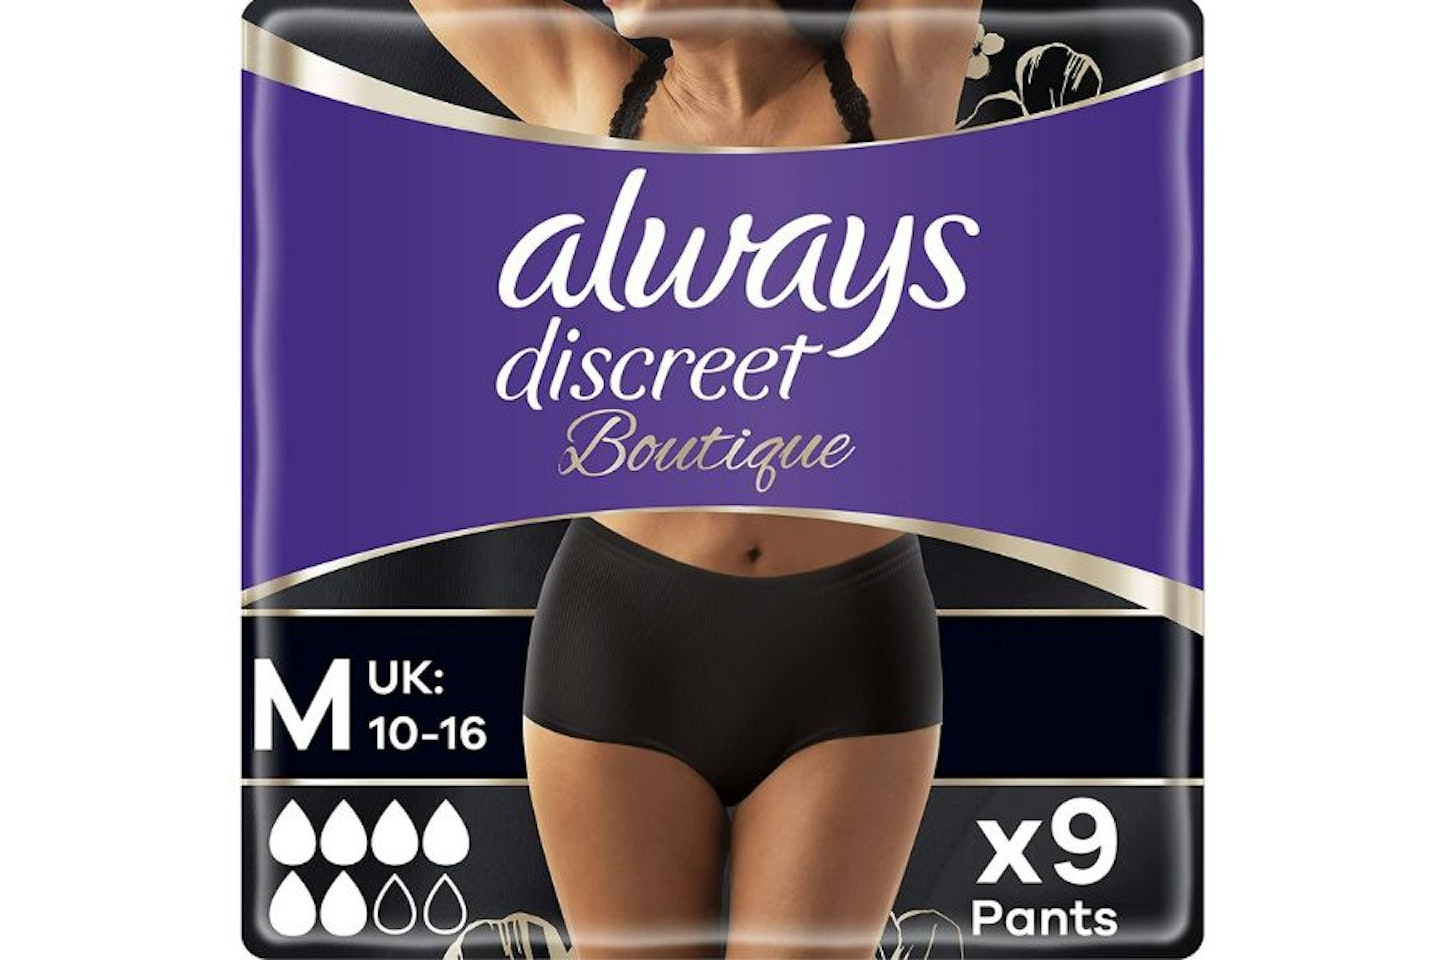 Always Discreet Incontinence Postpartum Underwear For Women S/M 38 pack